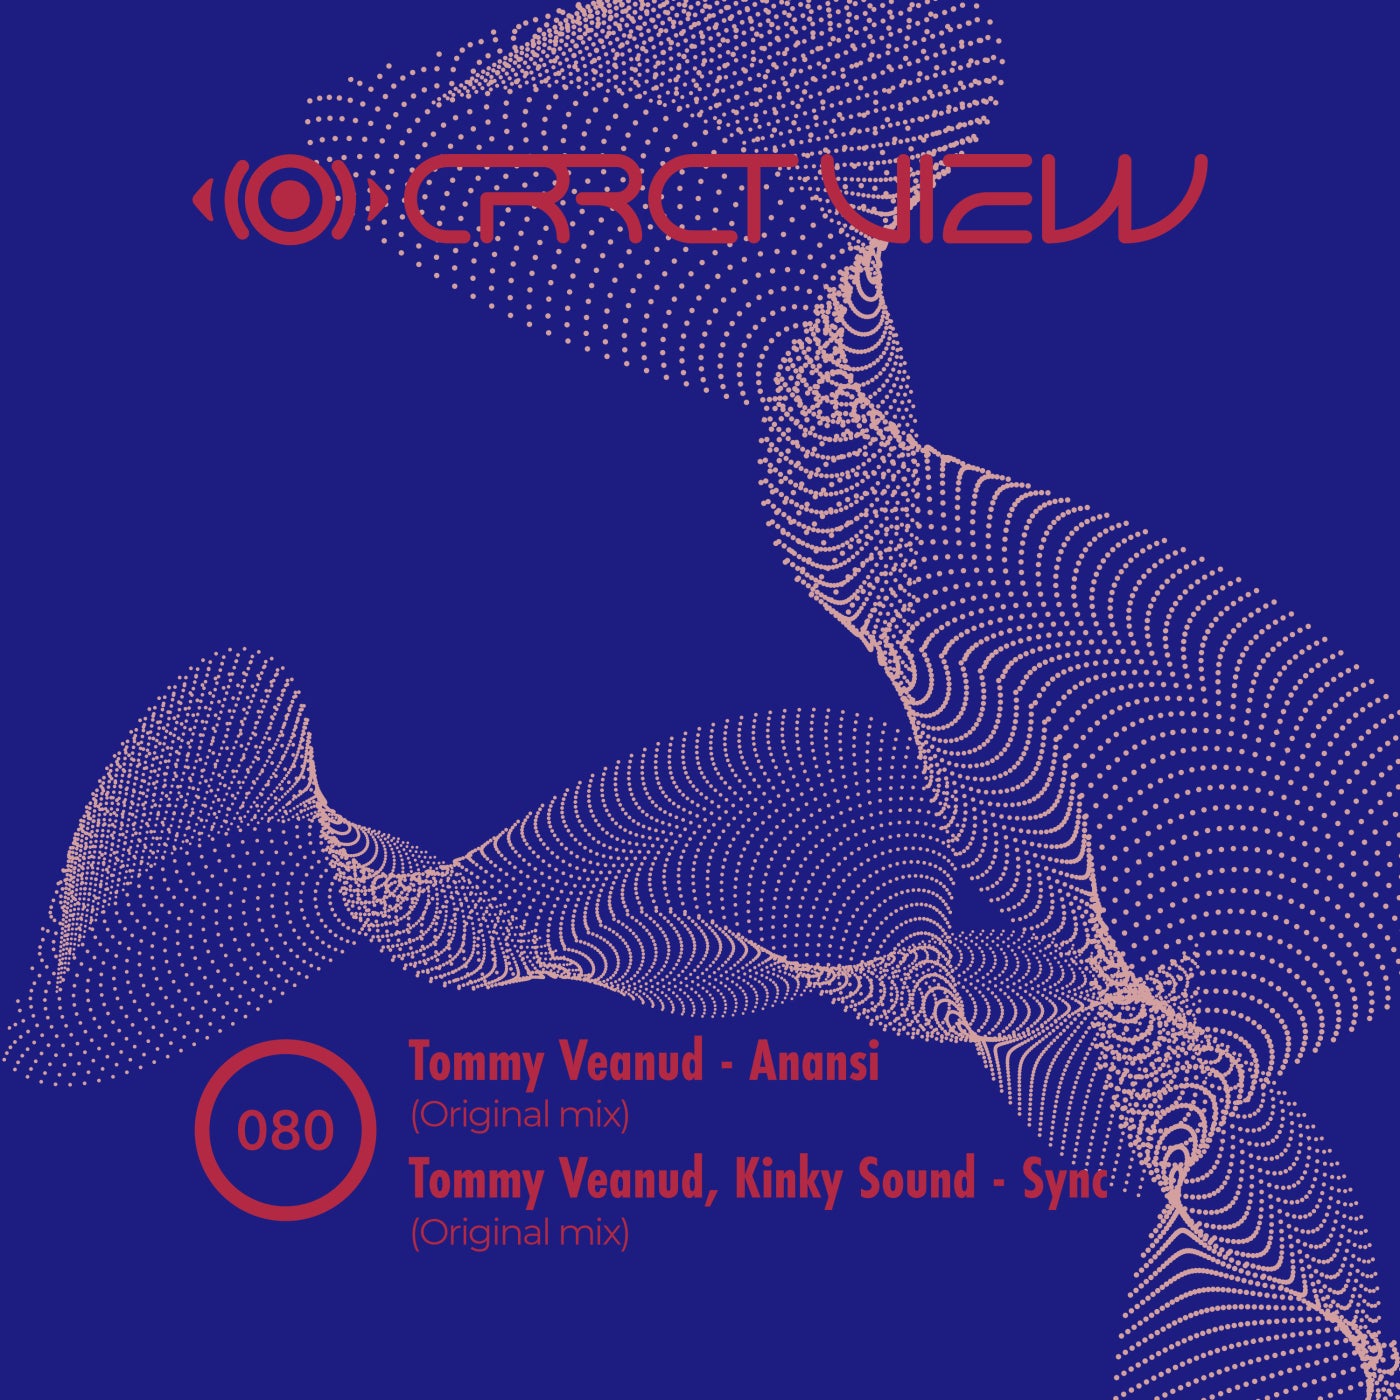 Cover - Tommy Veanud - Anansi (Original Mix)